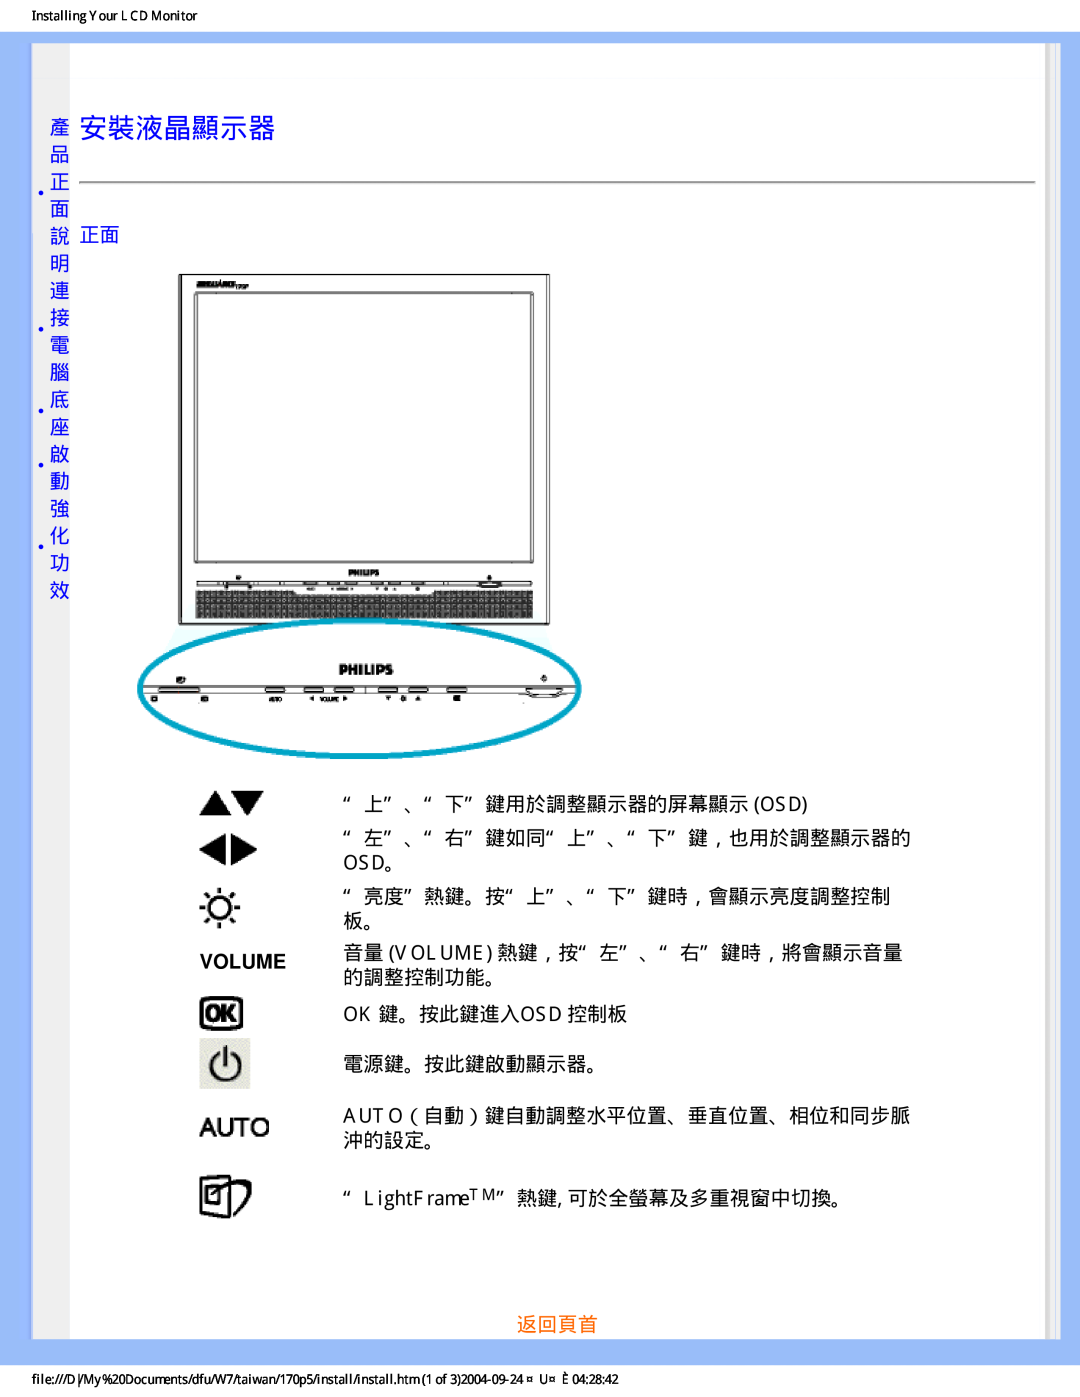 Philips 170p5 user manual 產 安裝液晶顯示器, Volume, 返回頁首 